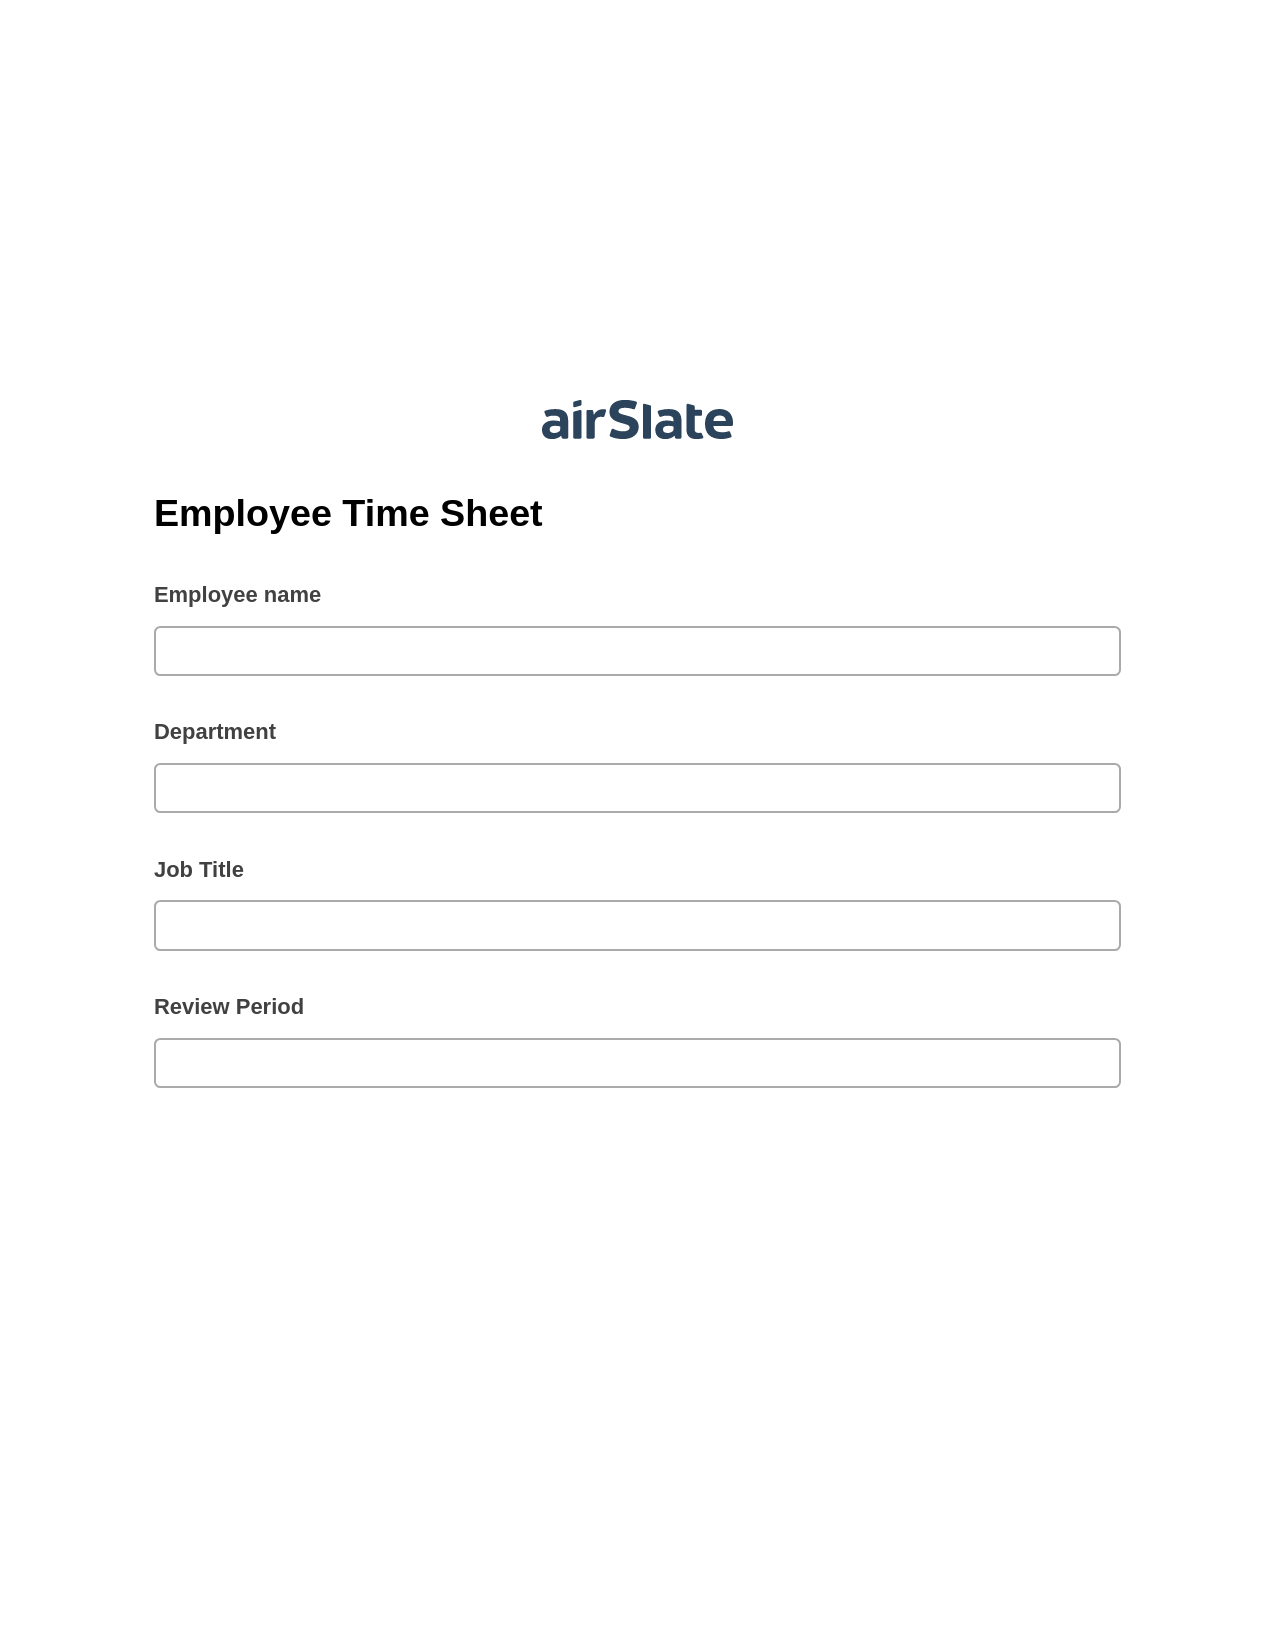 Multirole Employee Time Sheet Pre-fill from MySQL Bot, Remove Slate Bot, Export to Smartsheet